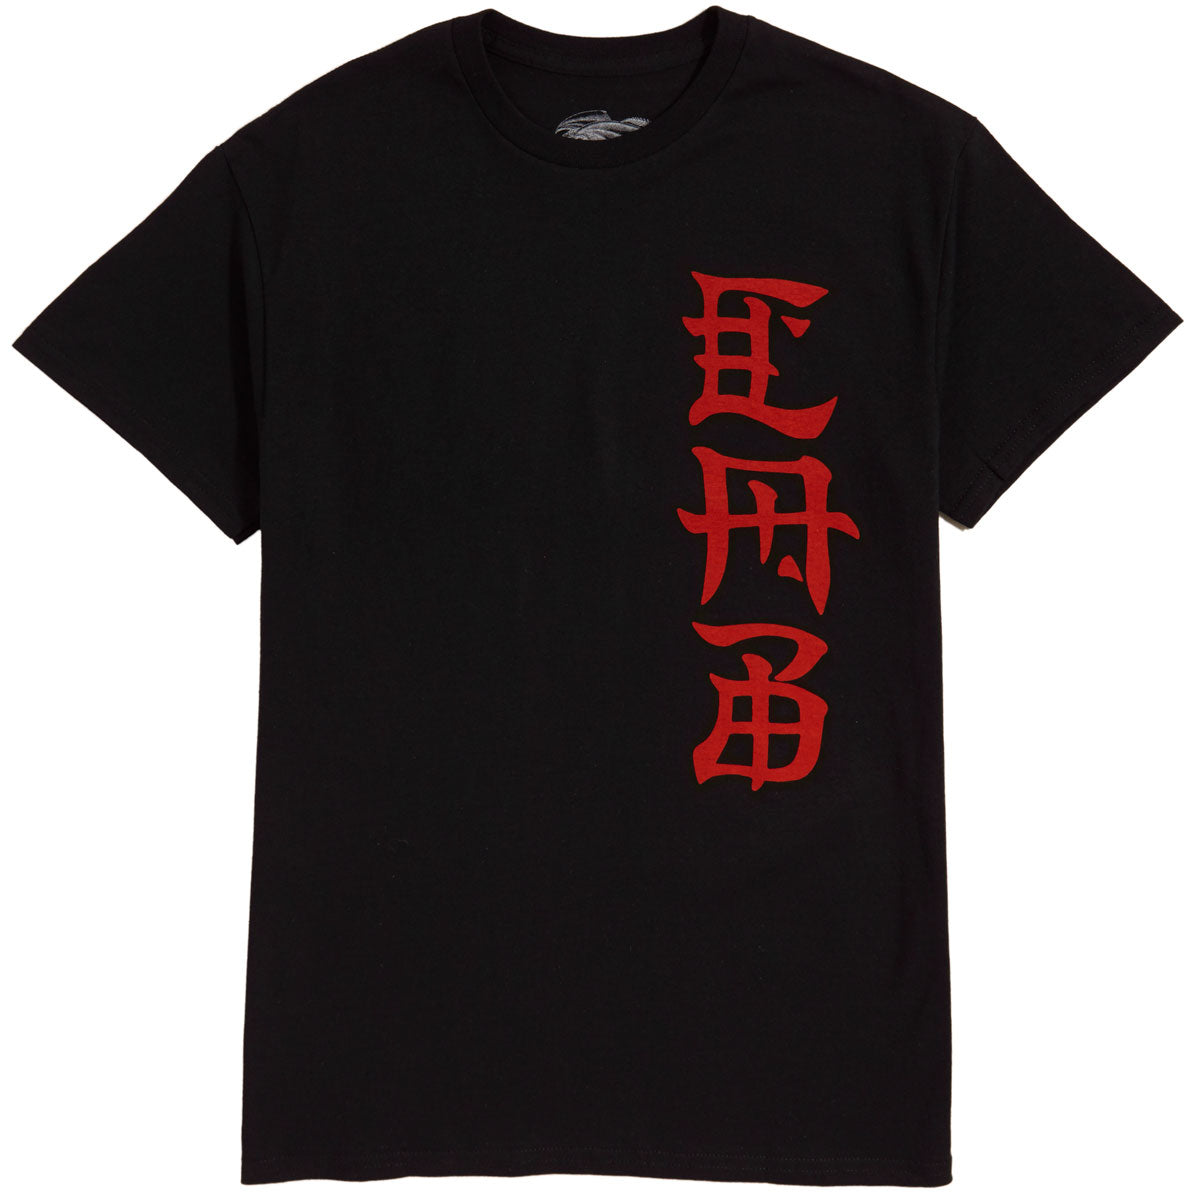 Powell-Peralta Cab Ban This T-Shirt - Black image 1